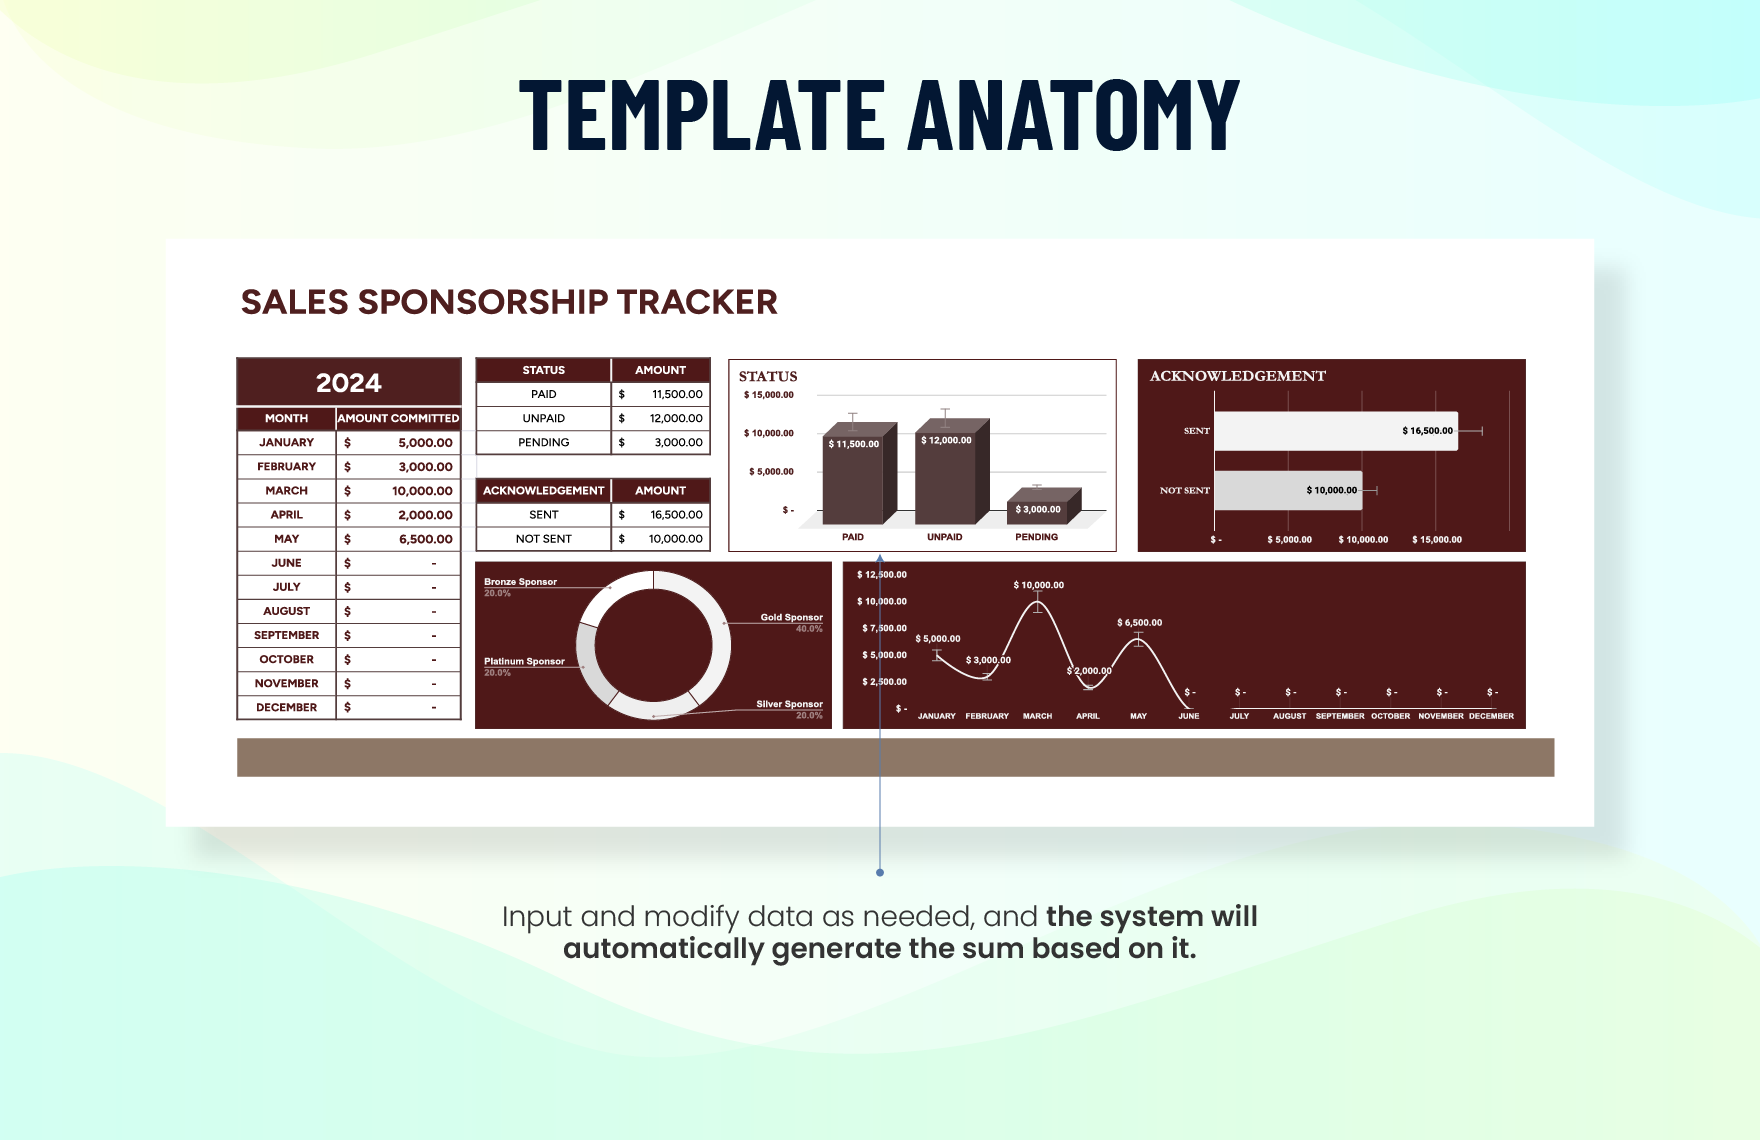 Sales Sponsorship Tracker Template